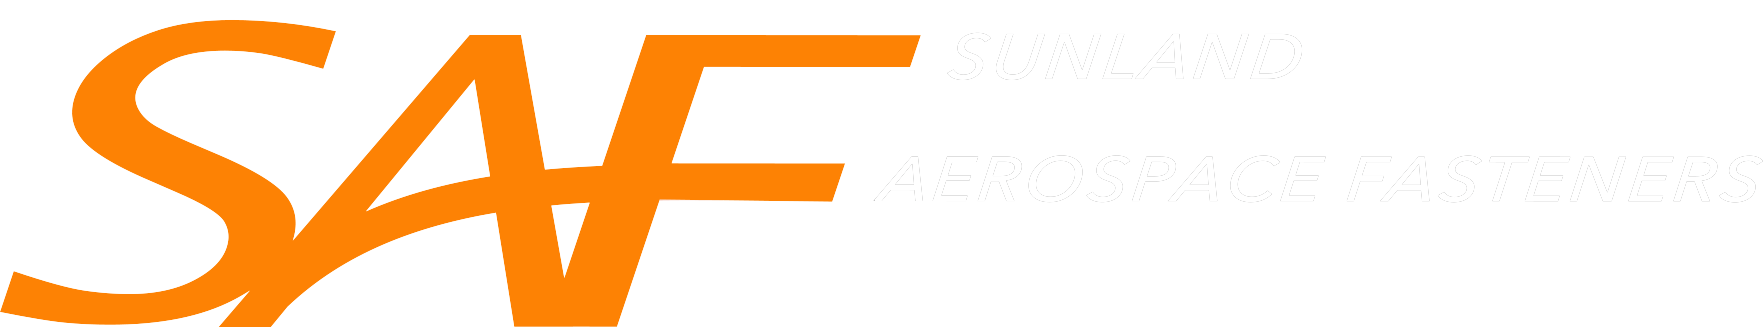 Sunland Aerospace Fasteners